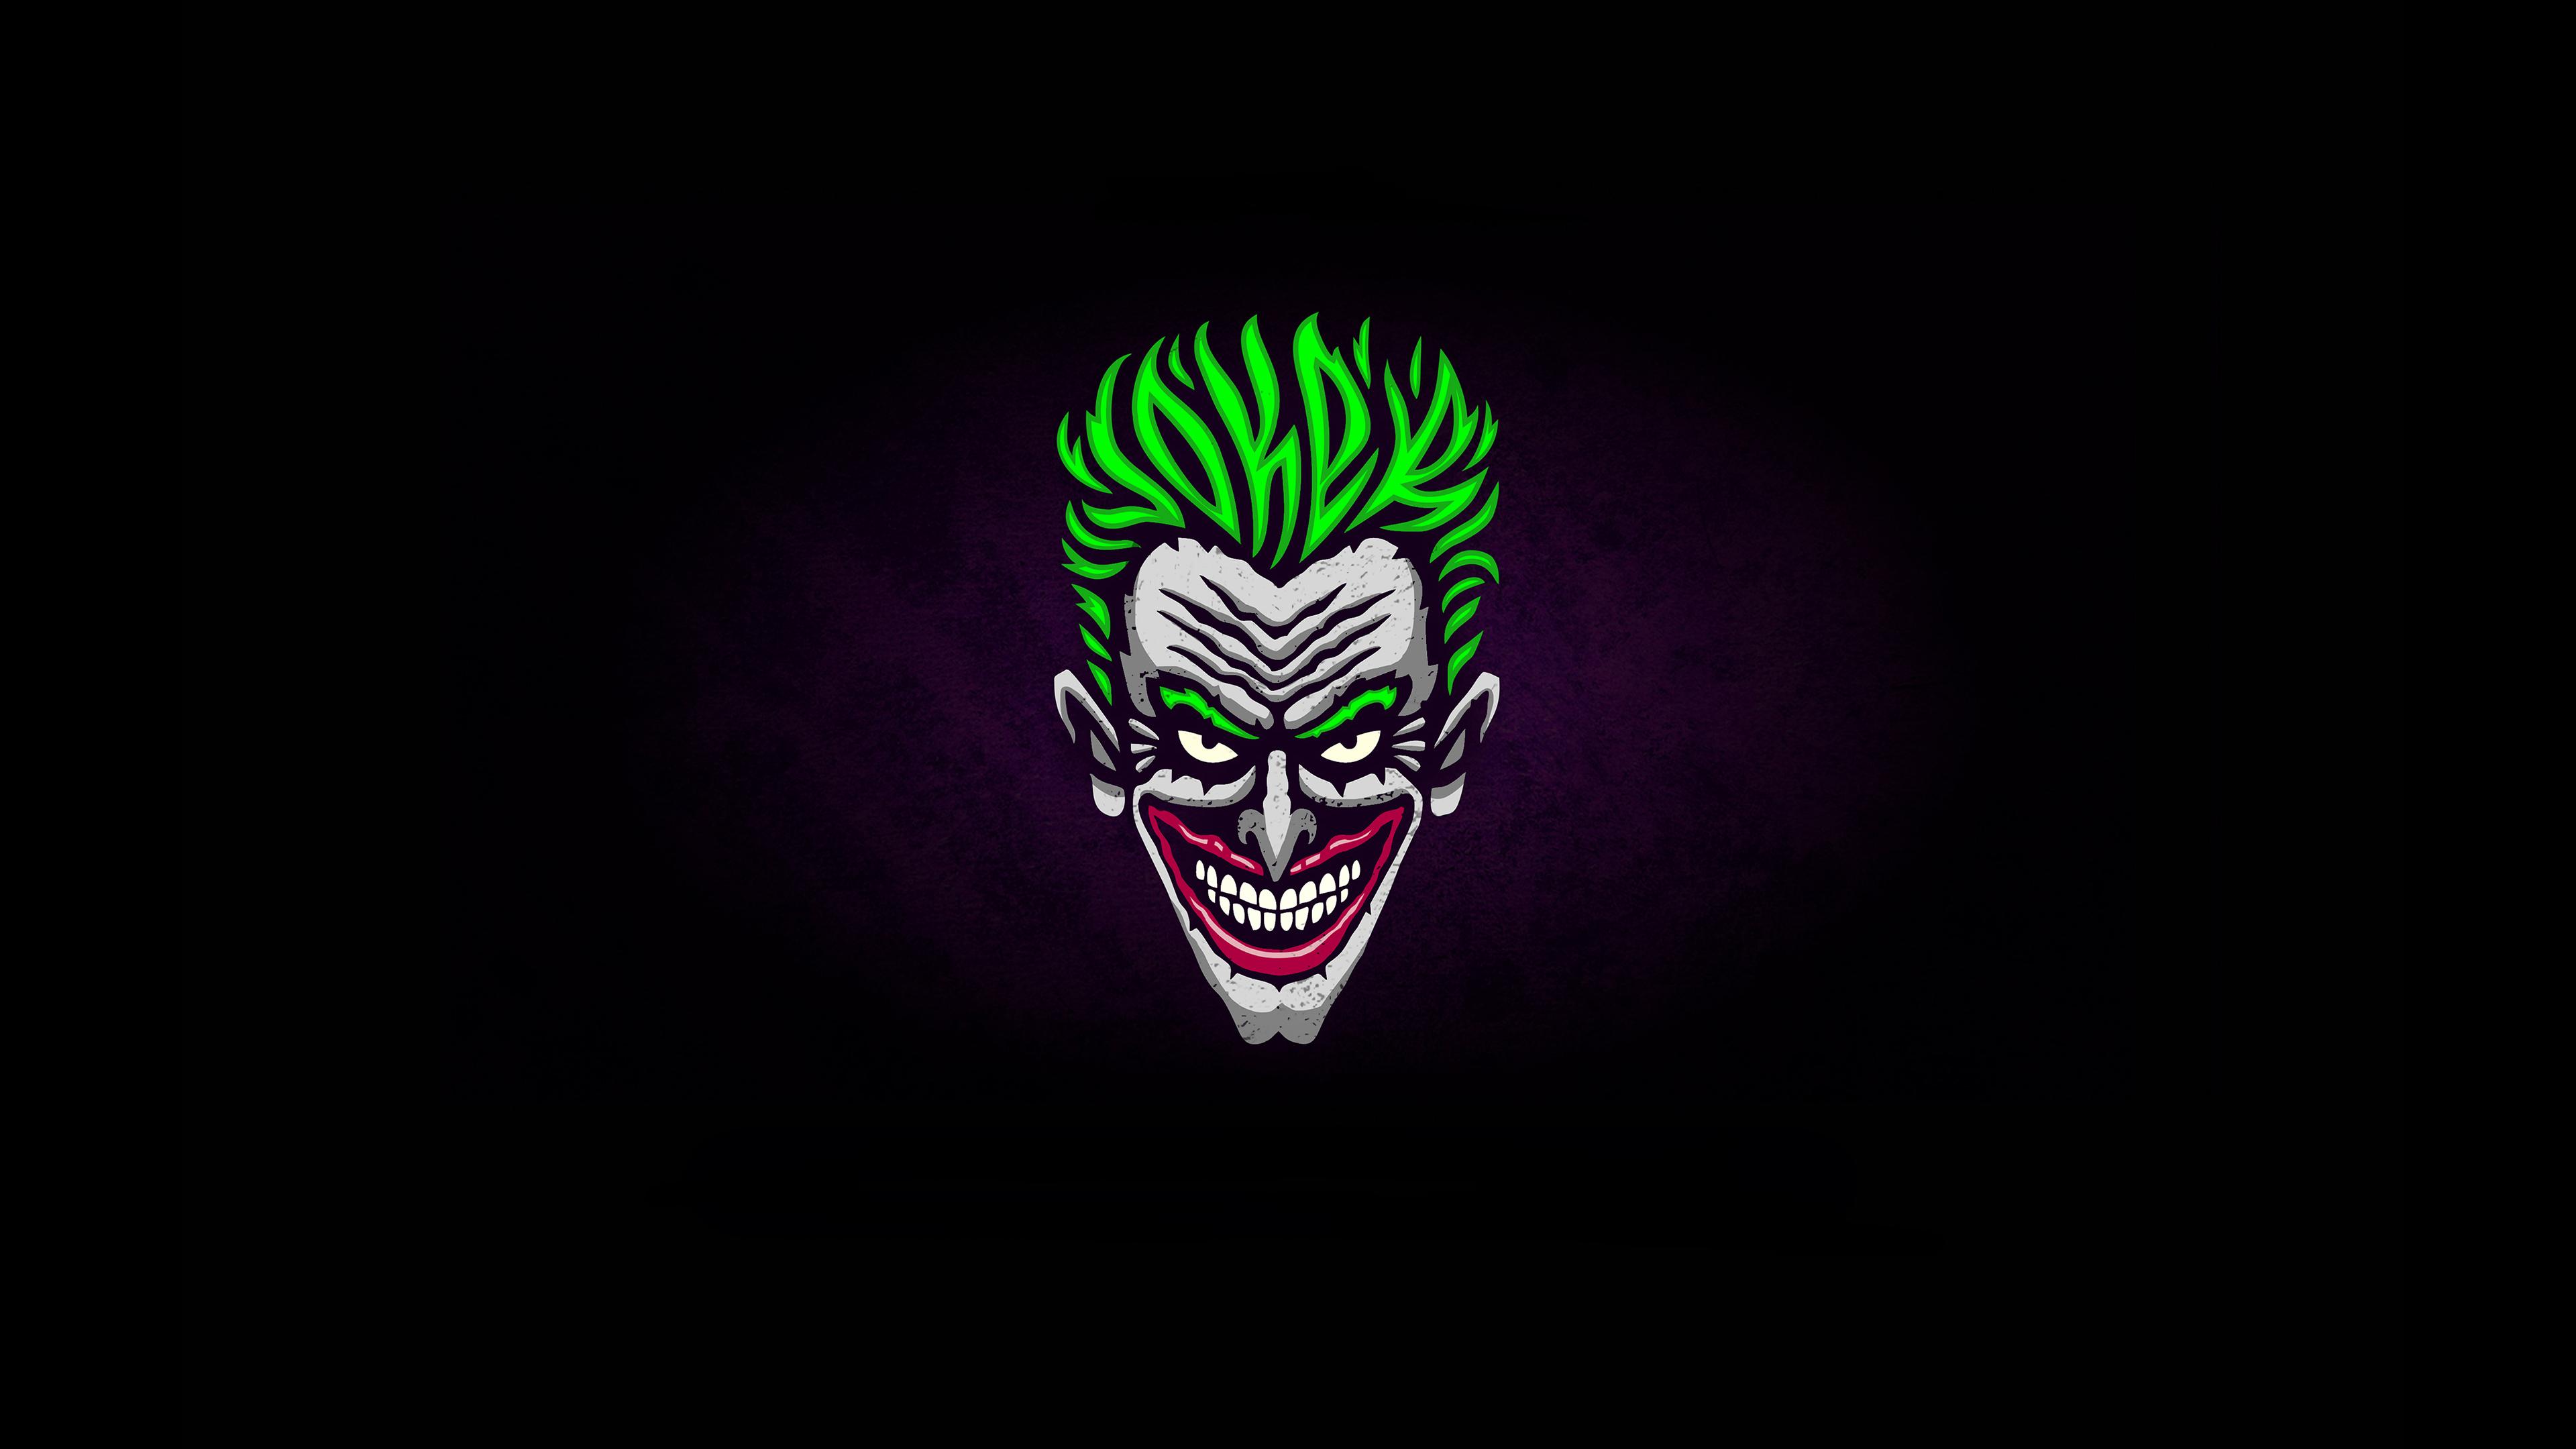 Joker Wallpapers HD Free download 